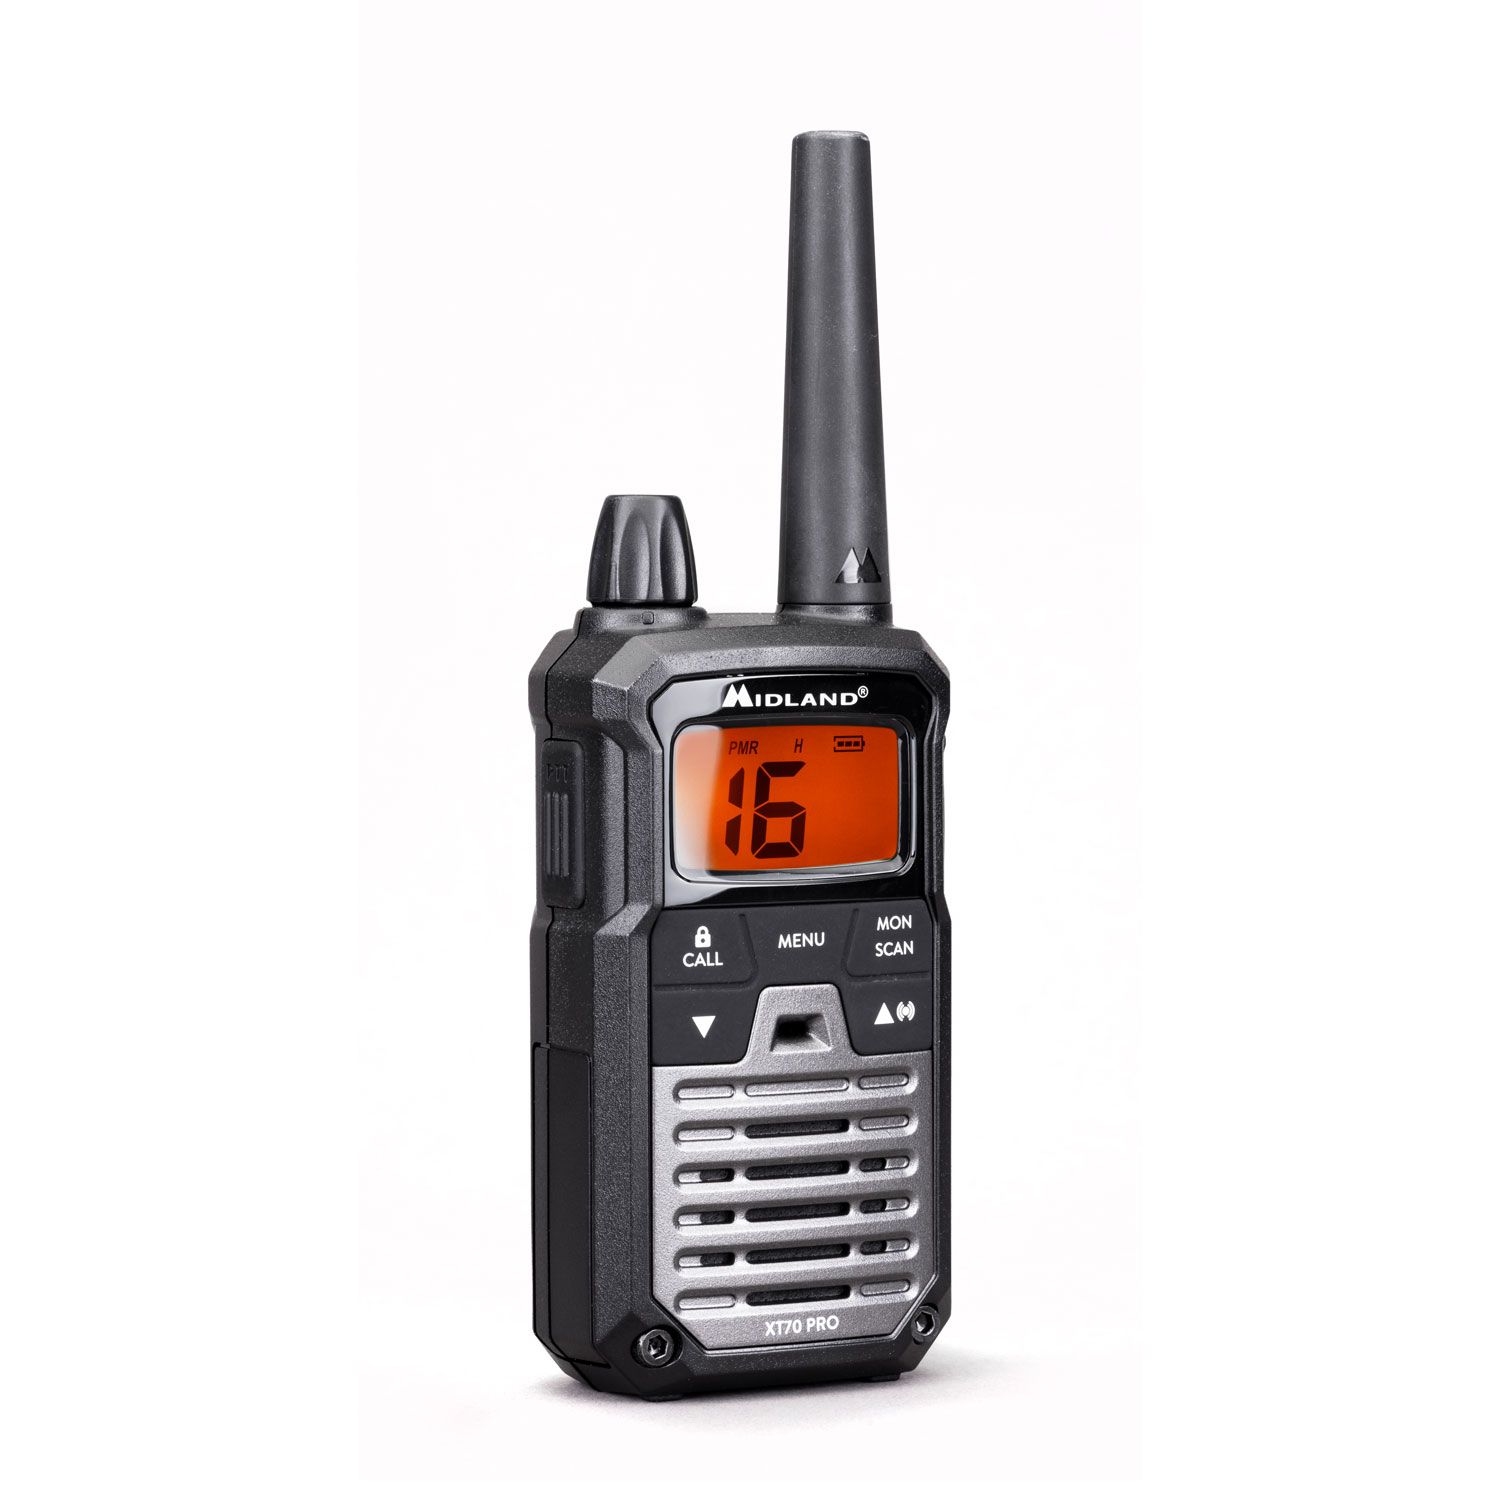 Pack 2 talkie-walkie Midland XT70